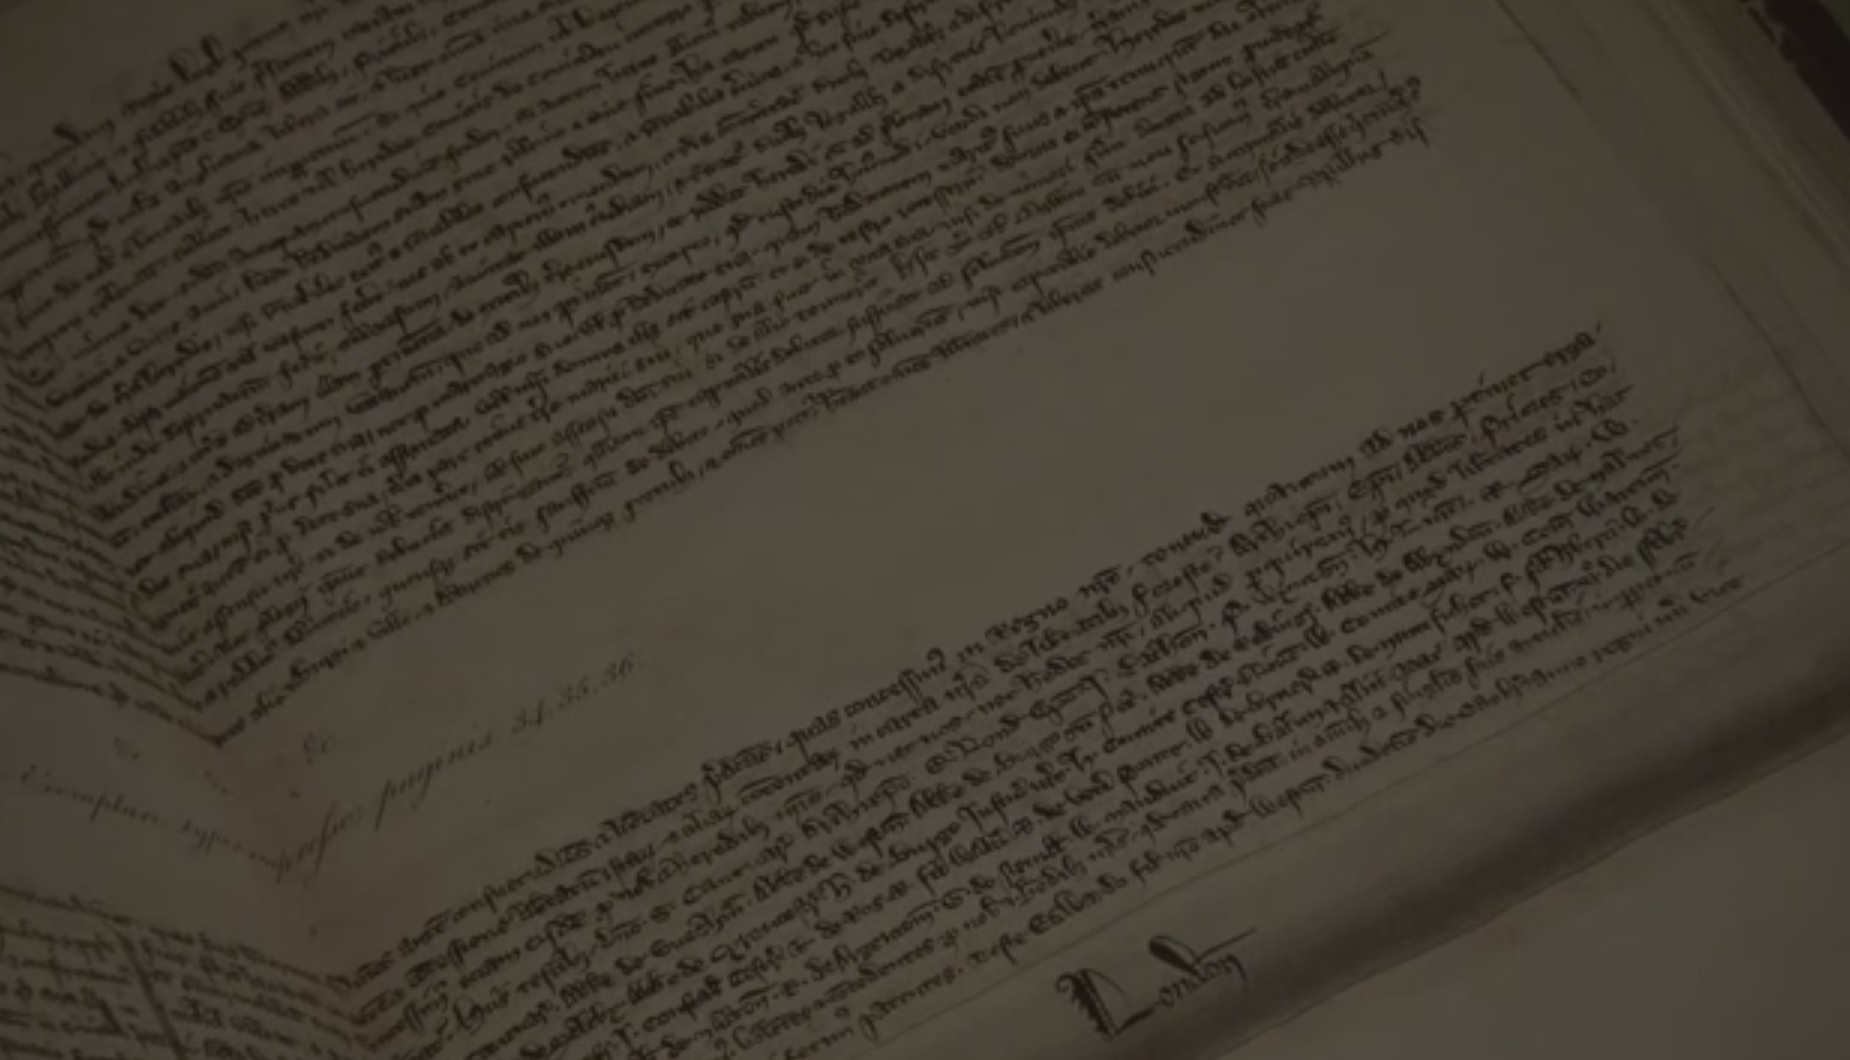 Magna Carta celebrates 800th birthday in DC